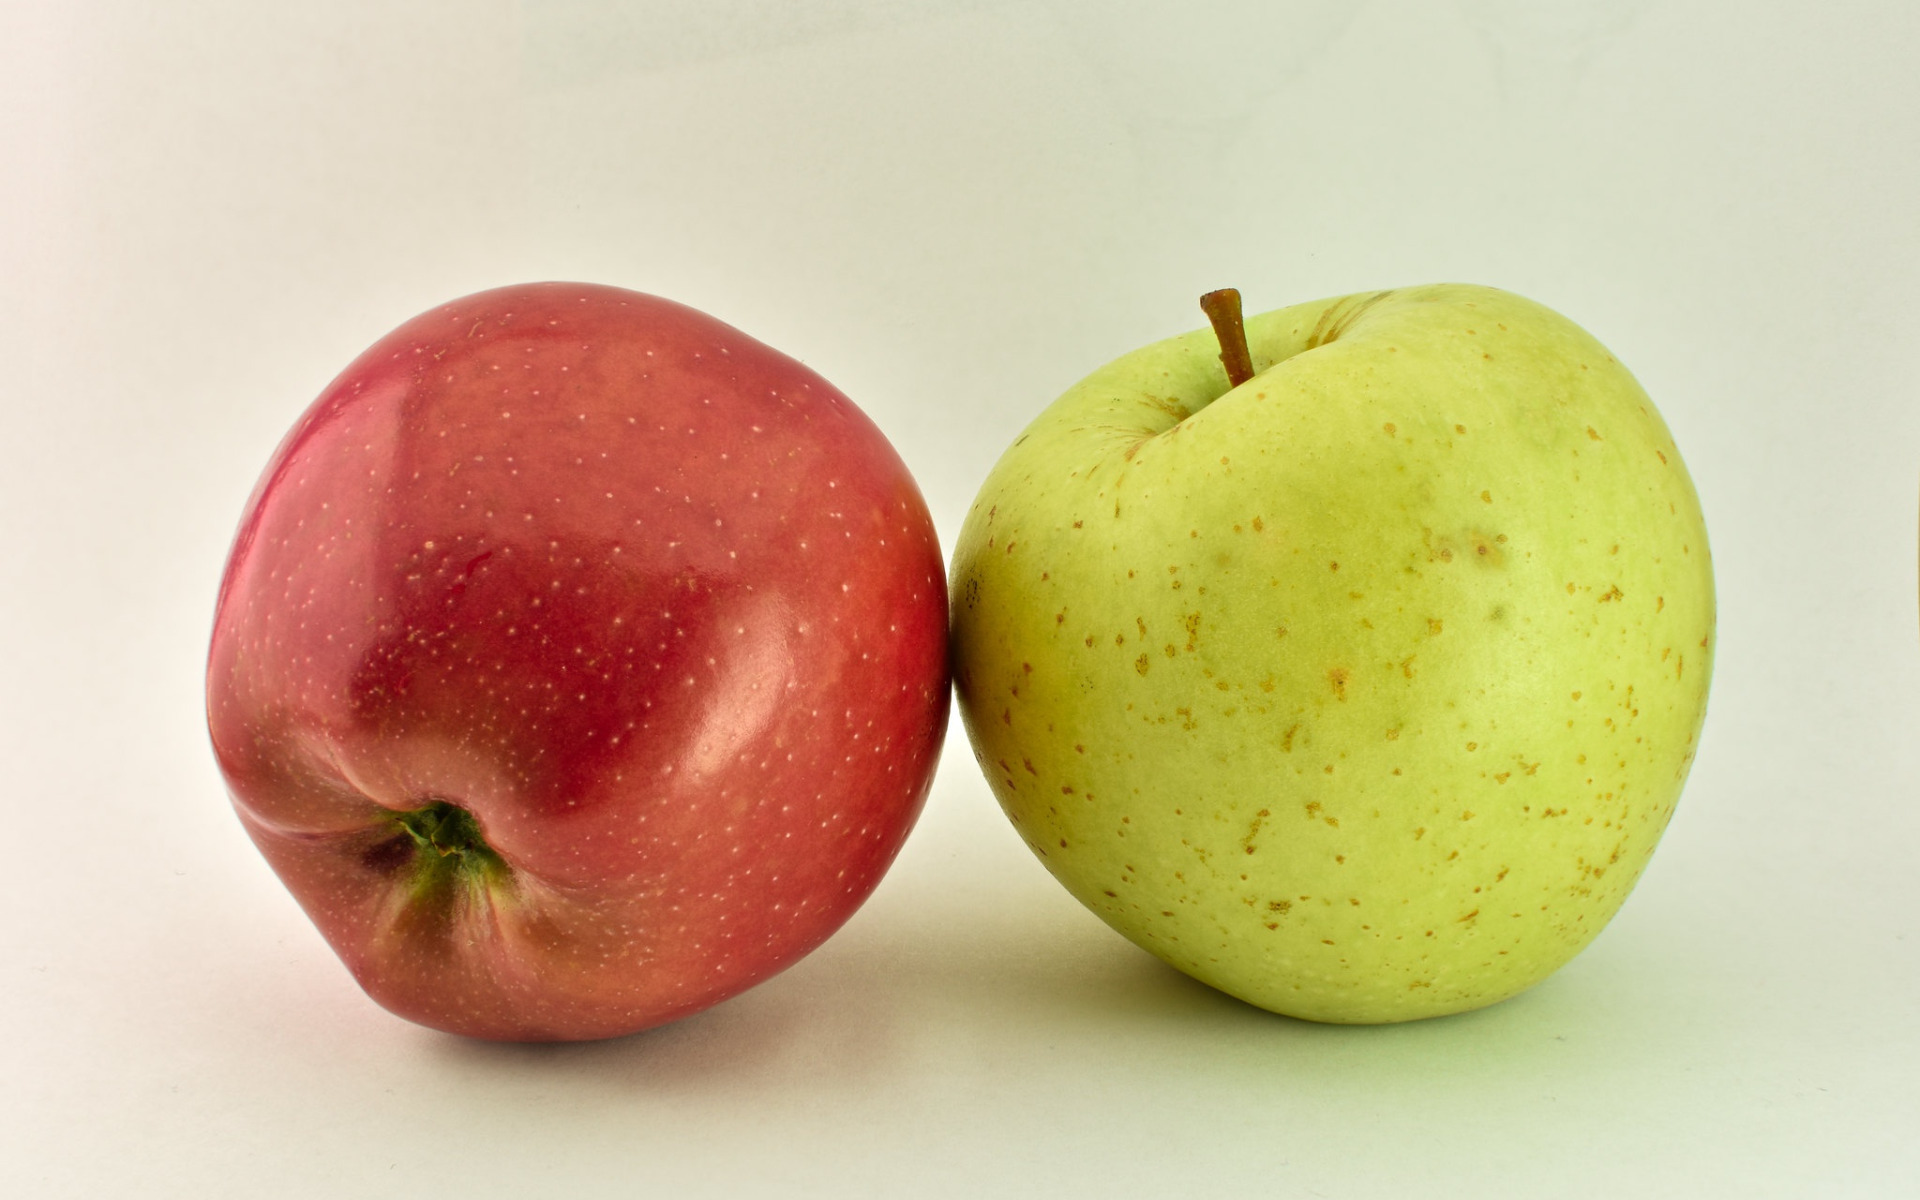 Две трети яблока. Яблоко. Яблоко 2. Разные яблоки. Одно яблоко.